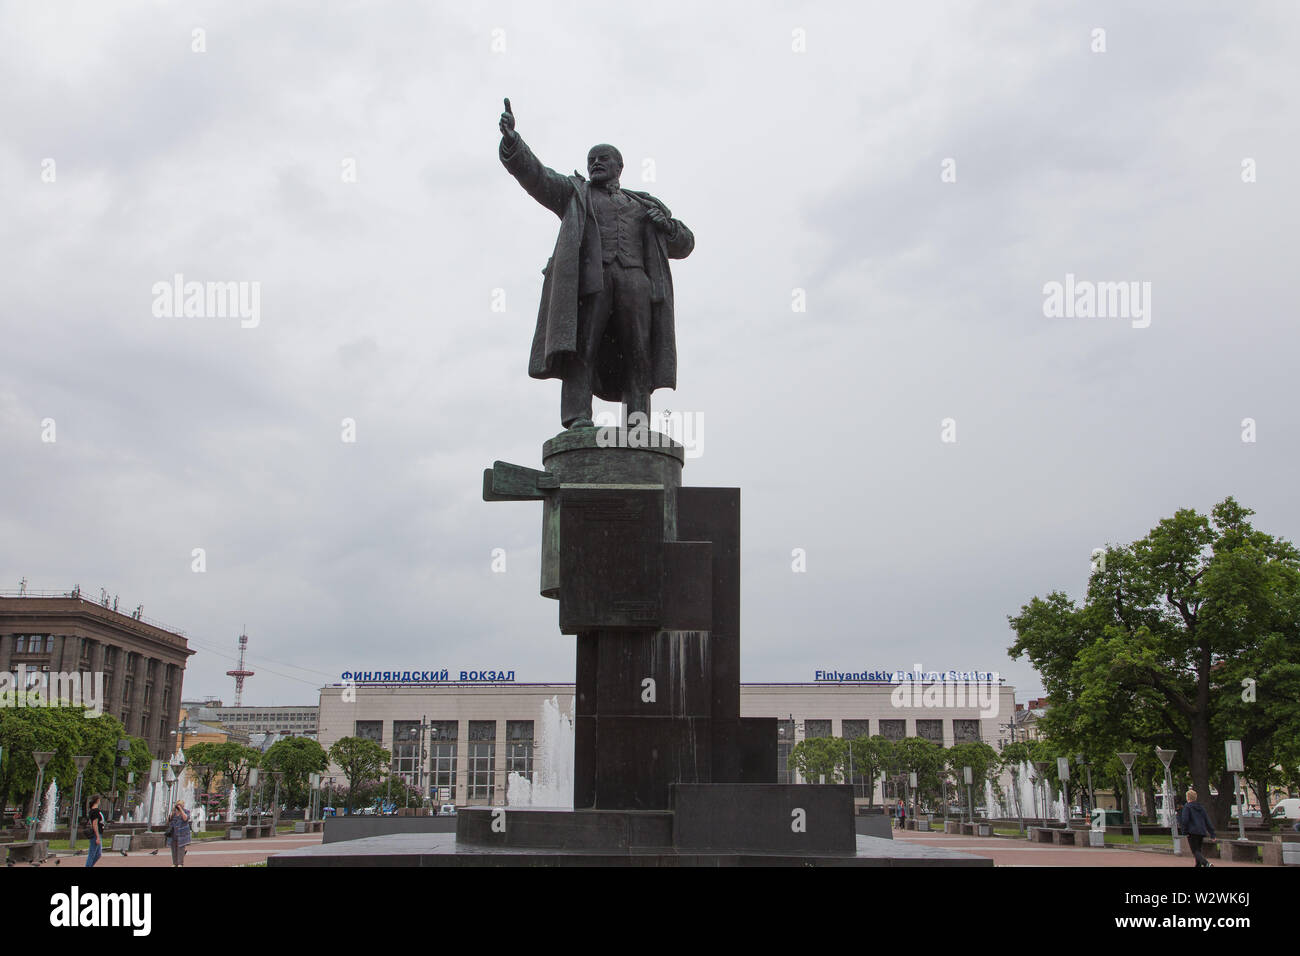 Saint-Petersburg, Russia - June, 18, 2017: Lenin statue in front of Finland Railway Station Stock Photo